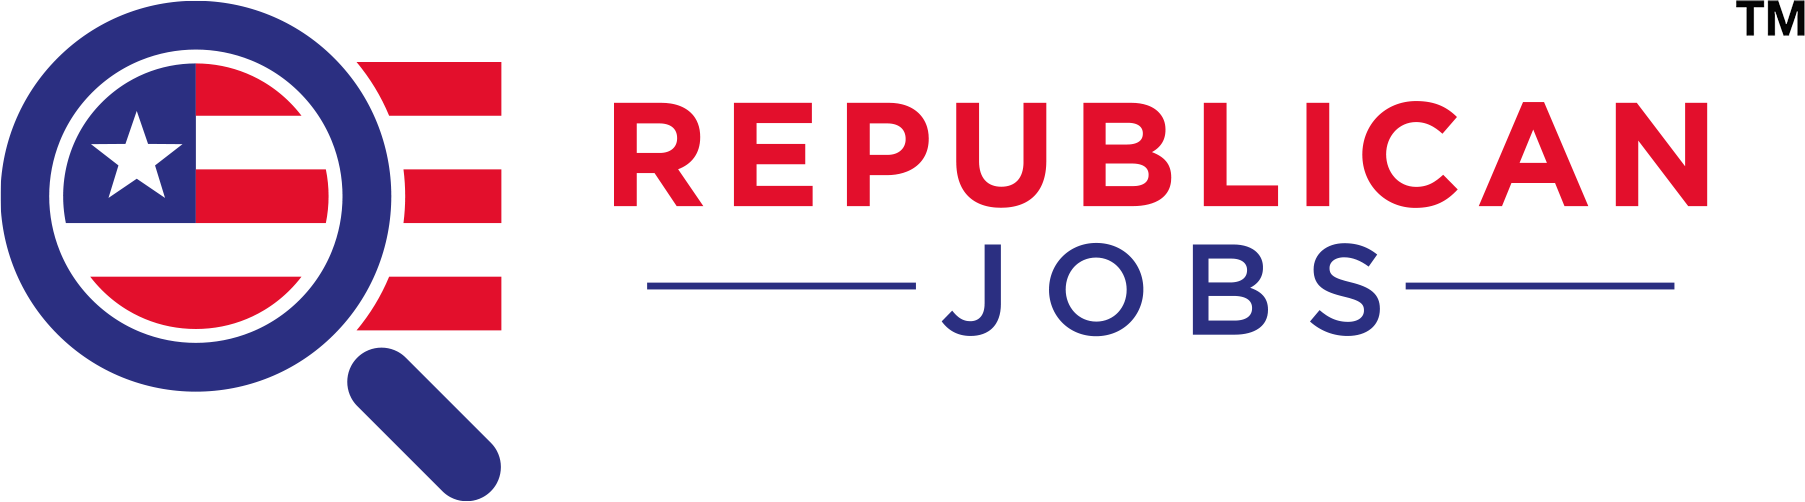 Republican jobs in Elkhart Indiana jobs